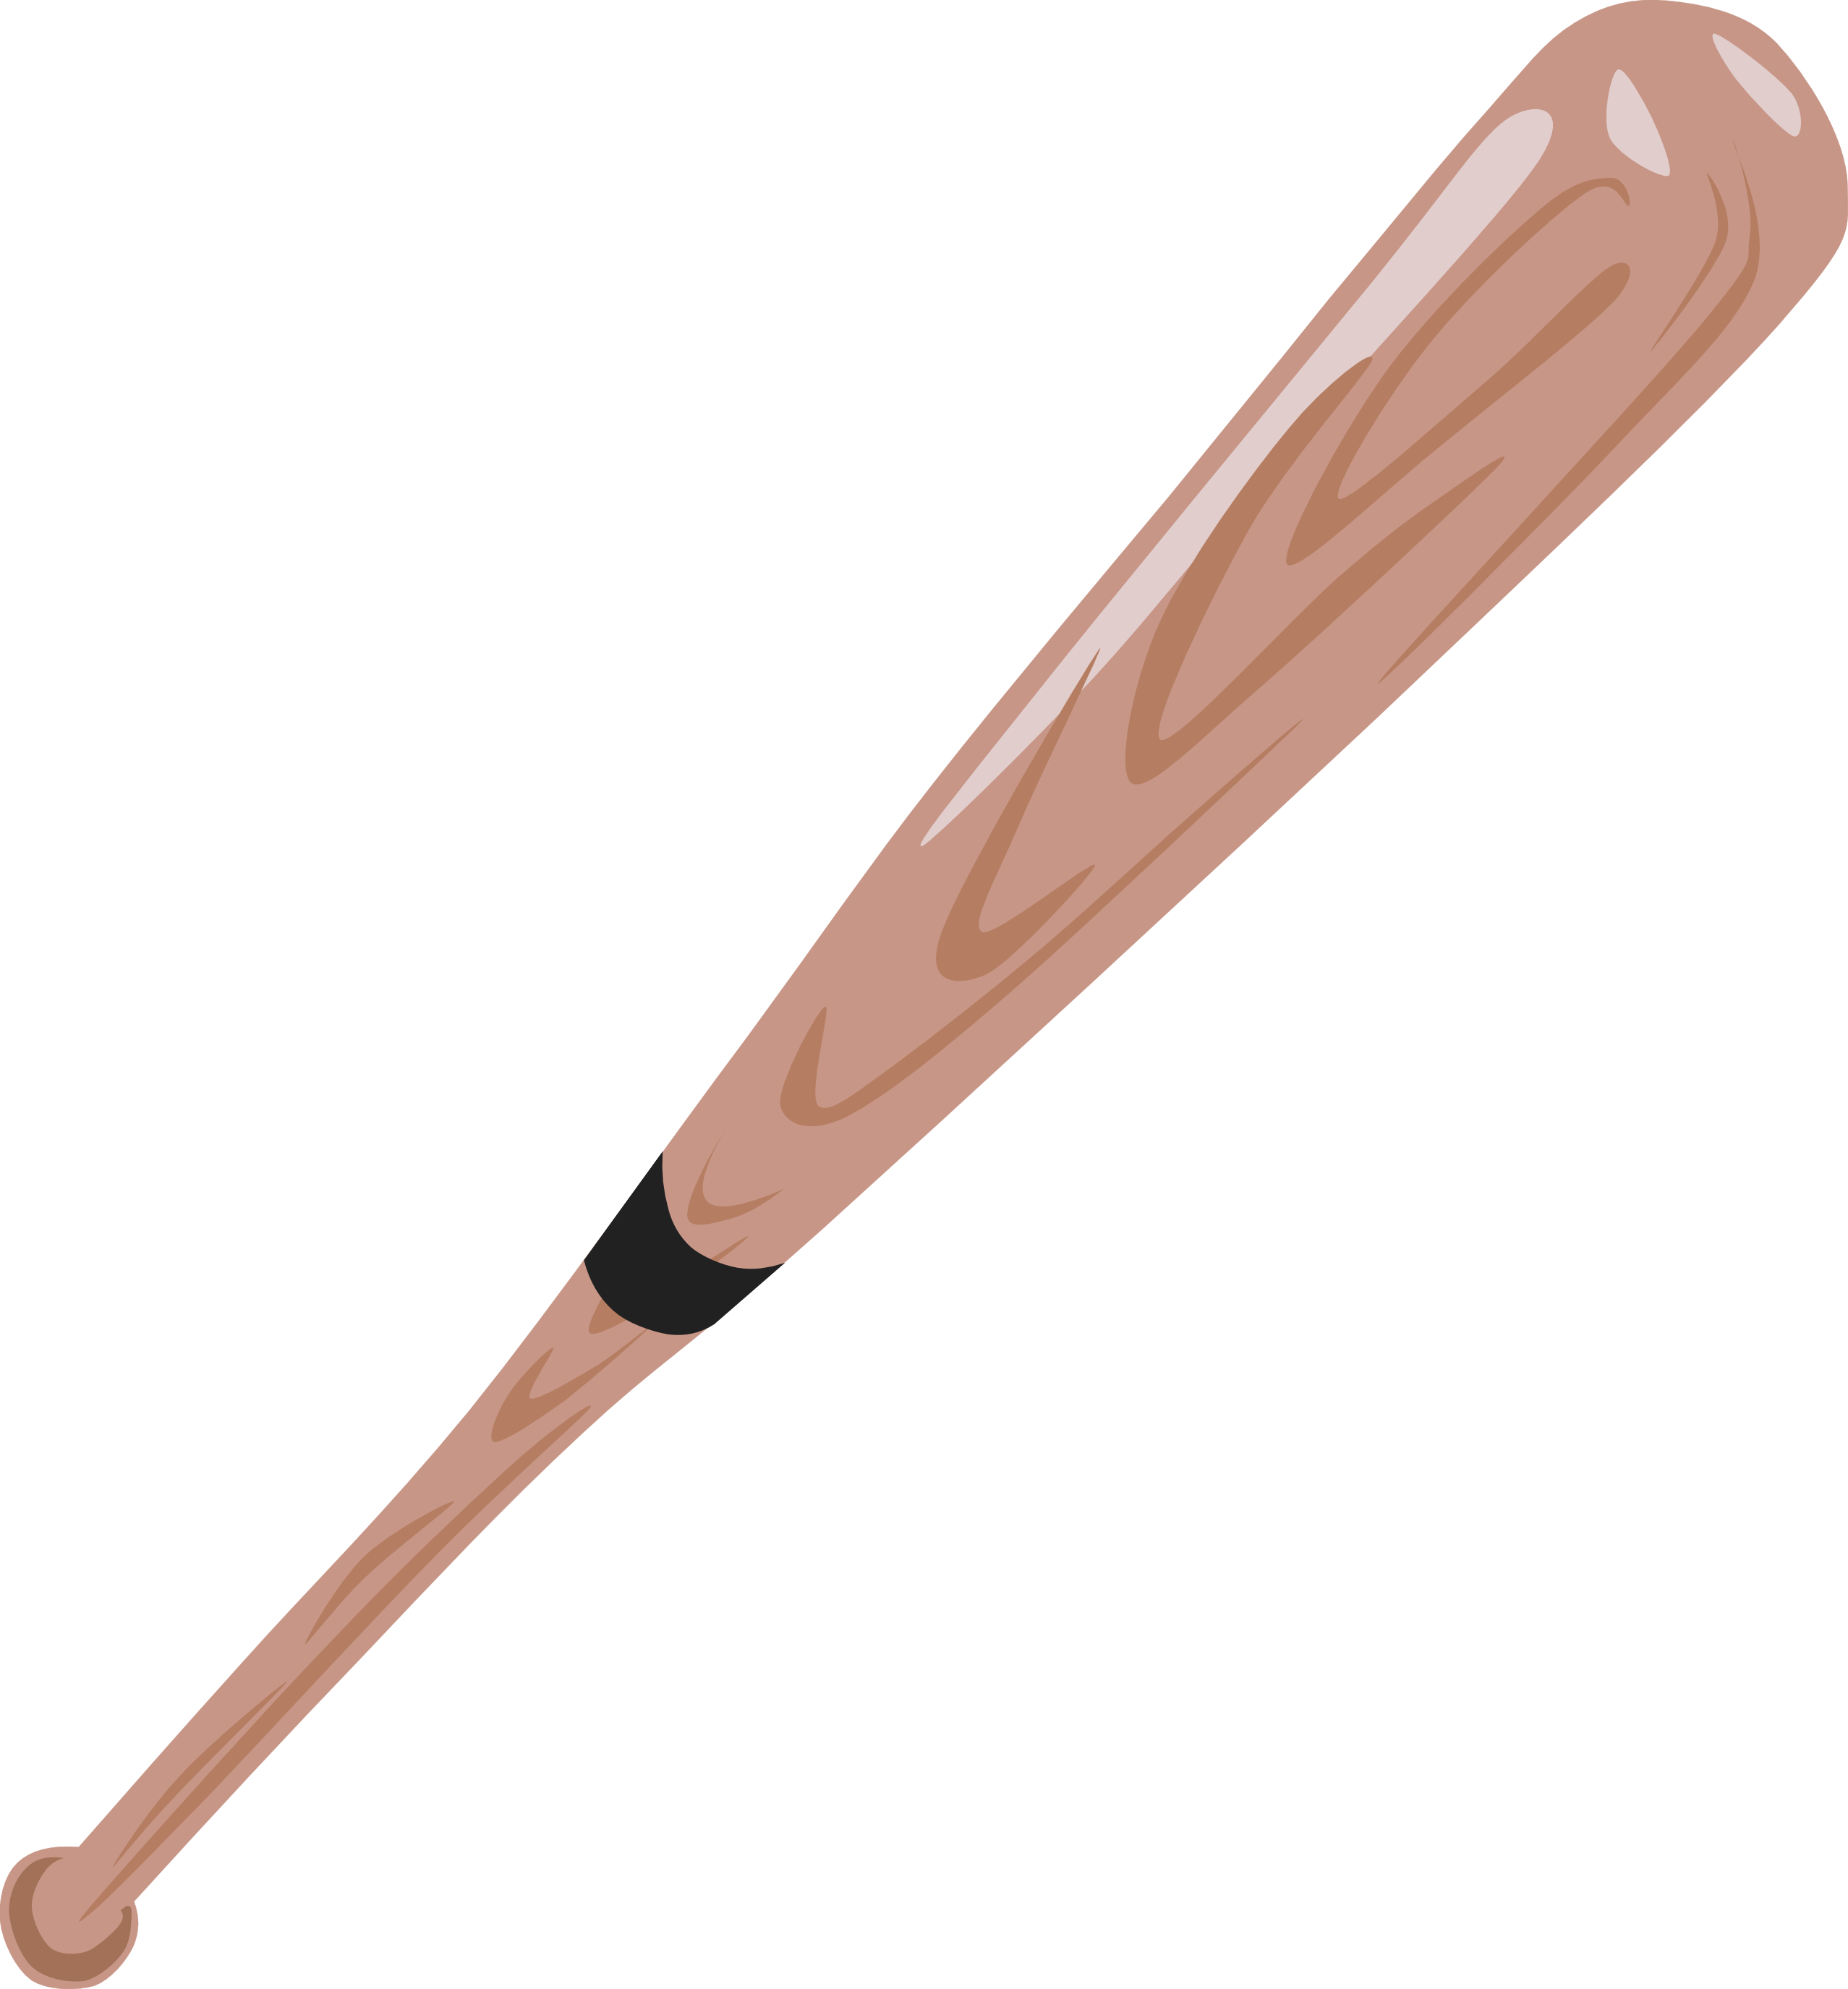 free clip art of baseball bat - photo #7